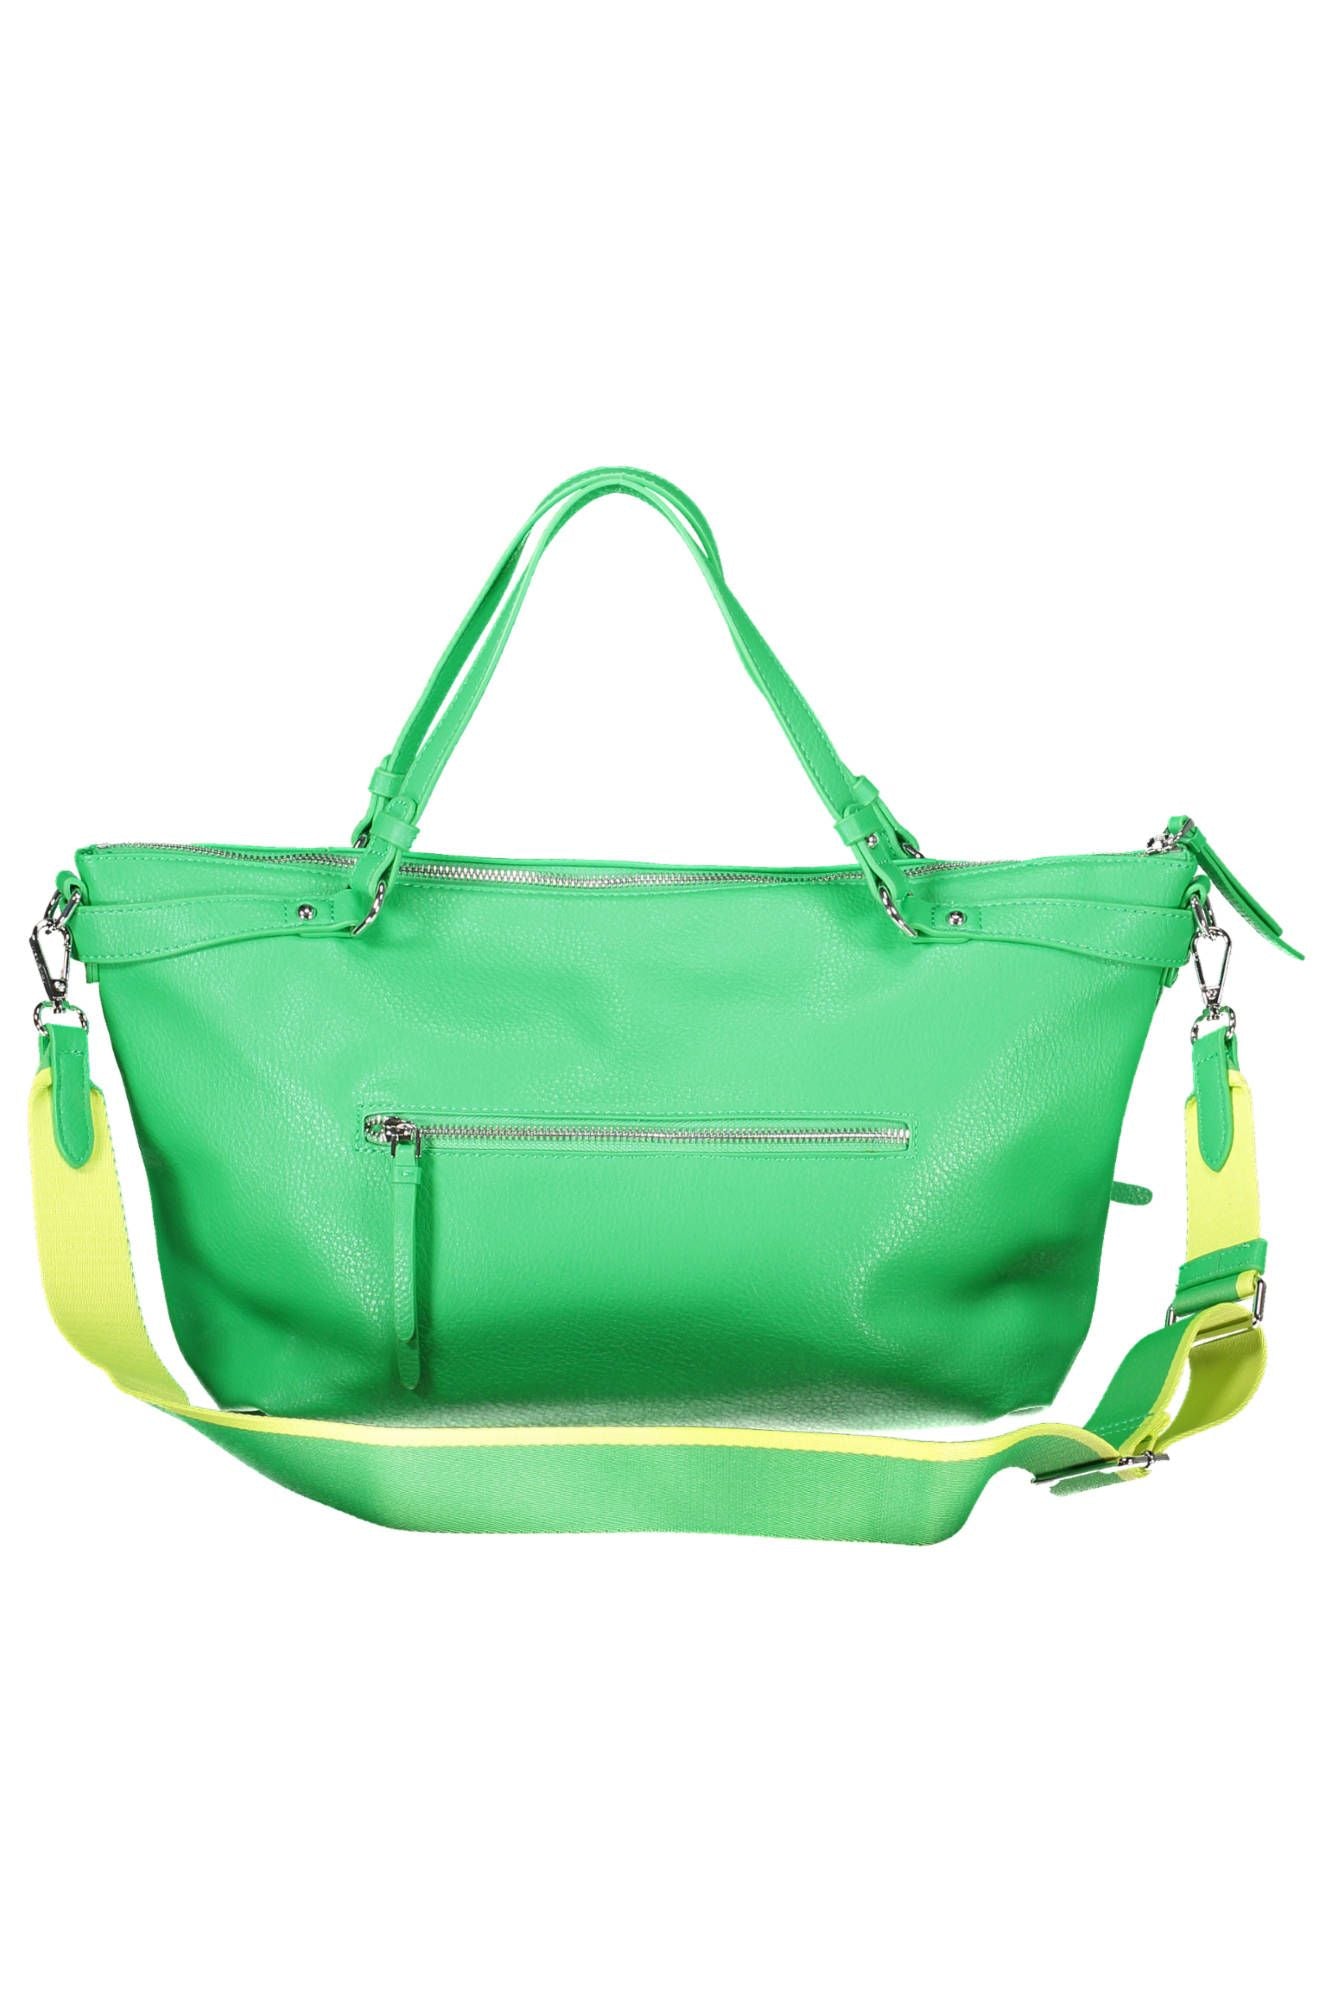 Desigual Green Polyurethane Handbag - Walbiz.com